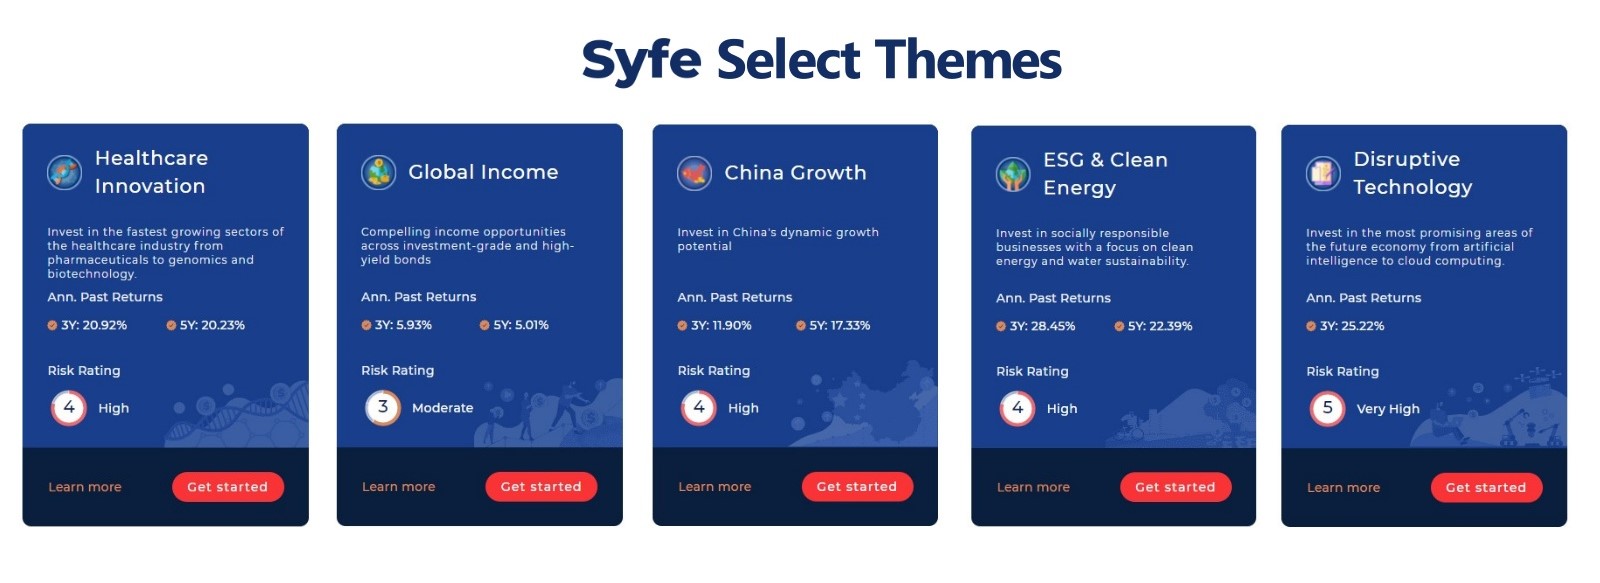 Syfe Select Themes